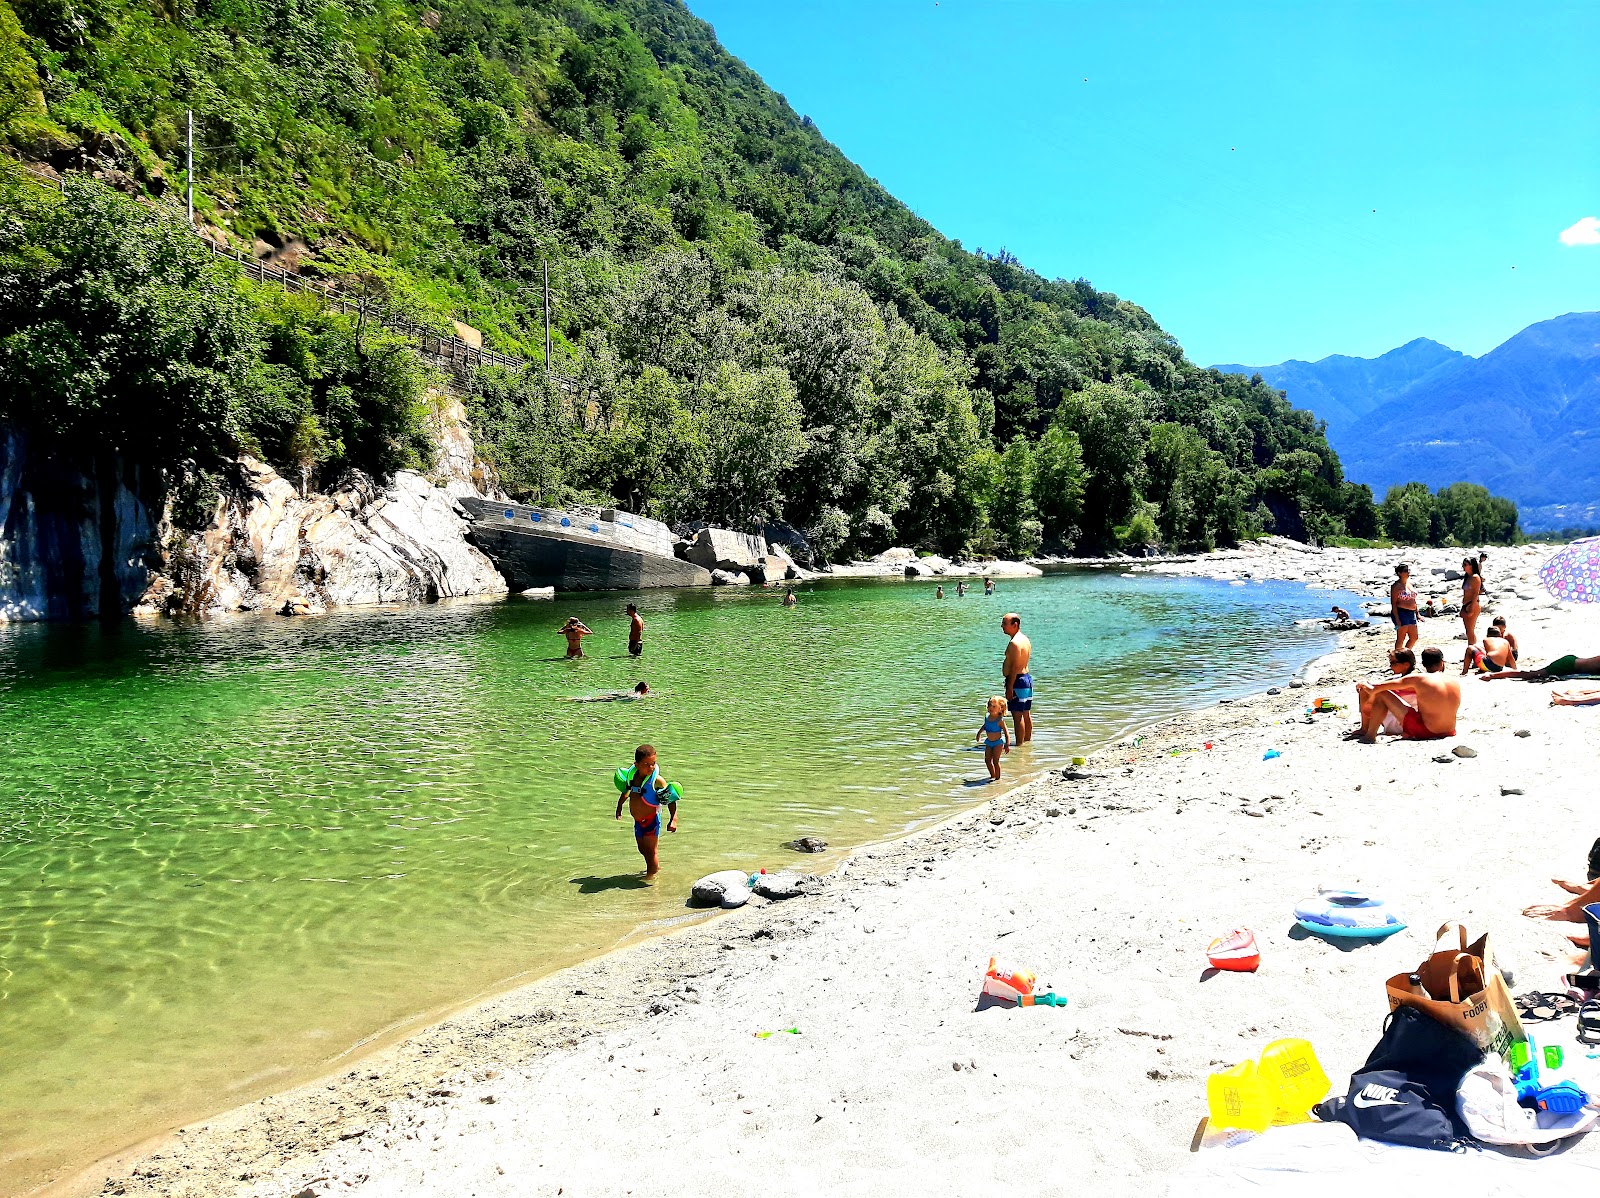 Photo of Spiaggia del Meriggio el Merisg with turquoise pure water surface